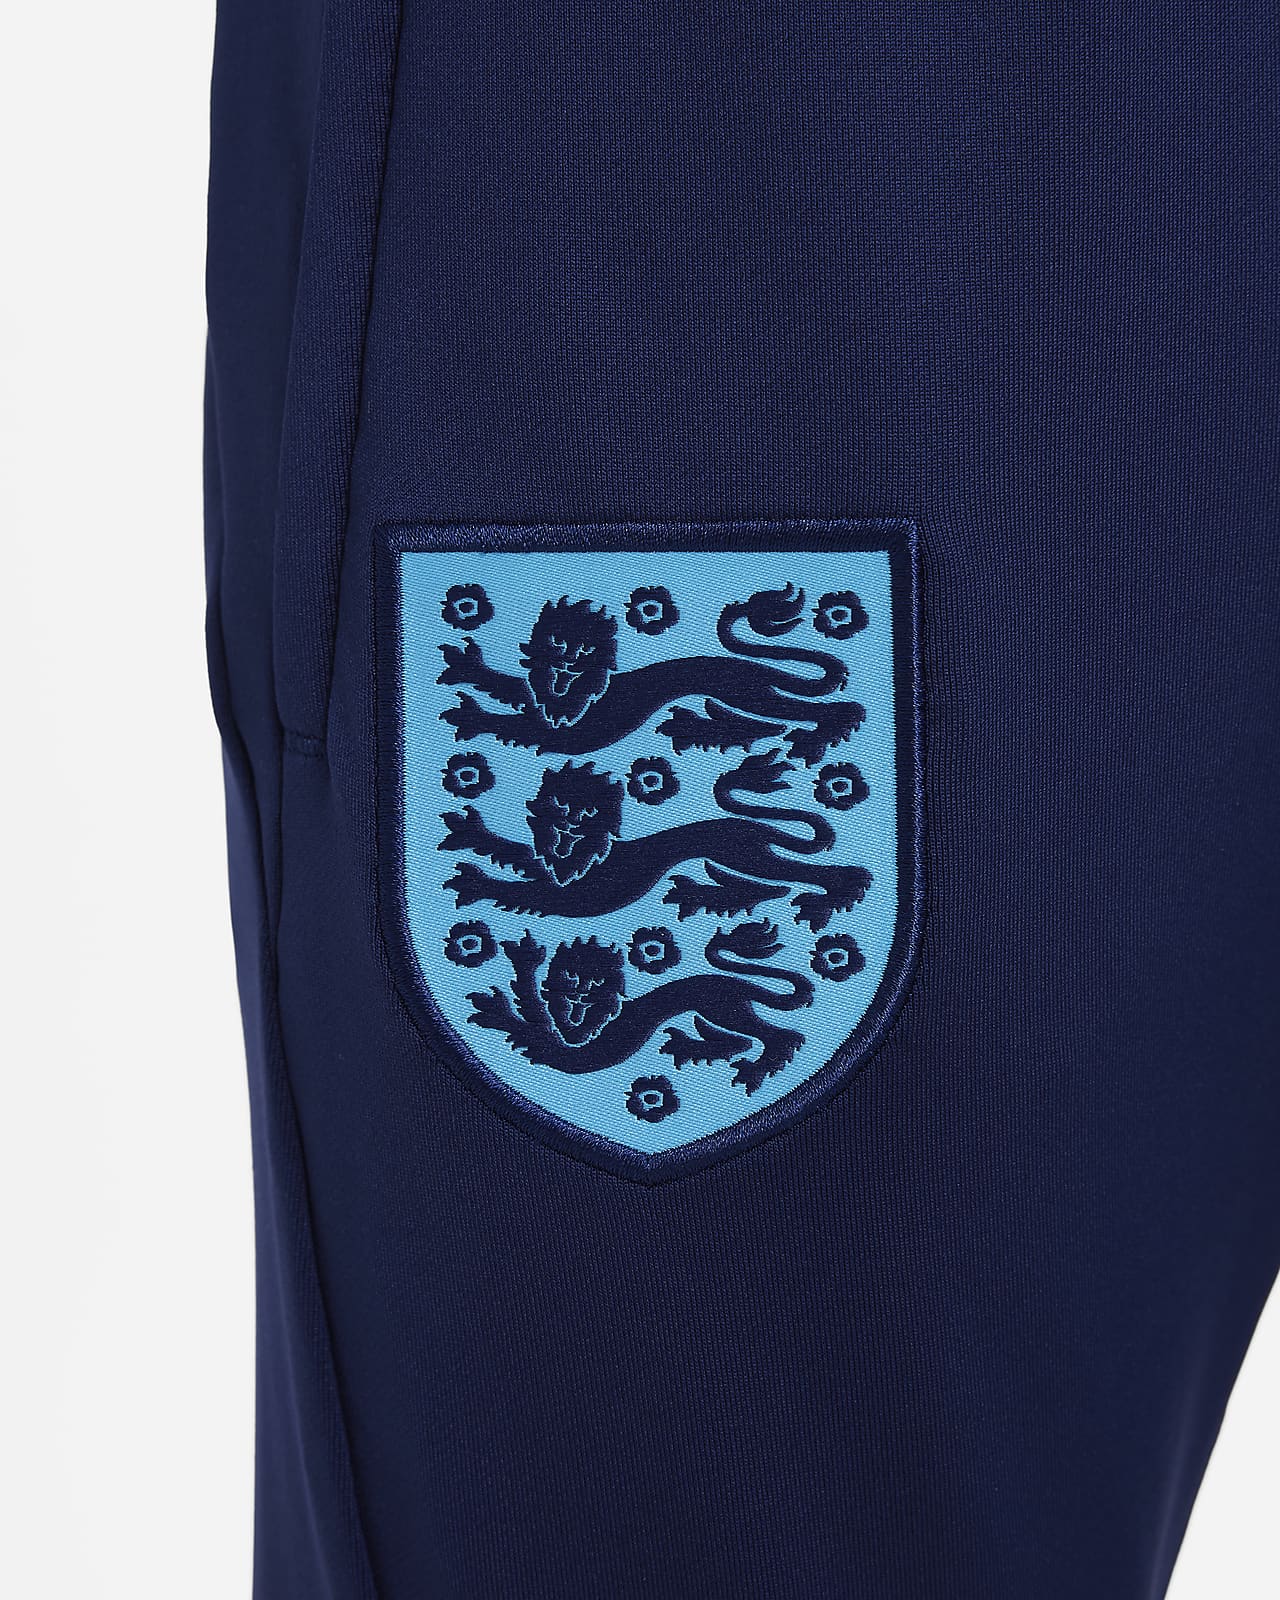 England Strike Big Kids\' Nike Dri-FIT Knit Soccer Pants.